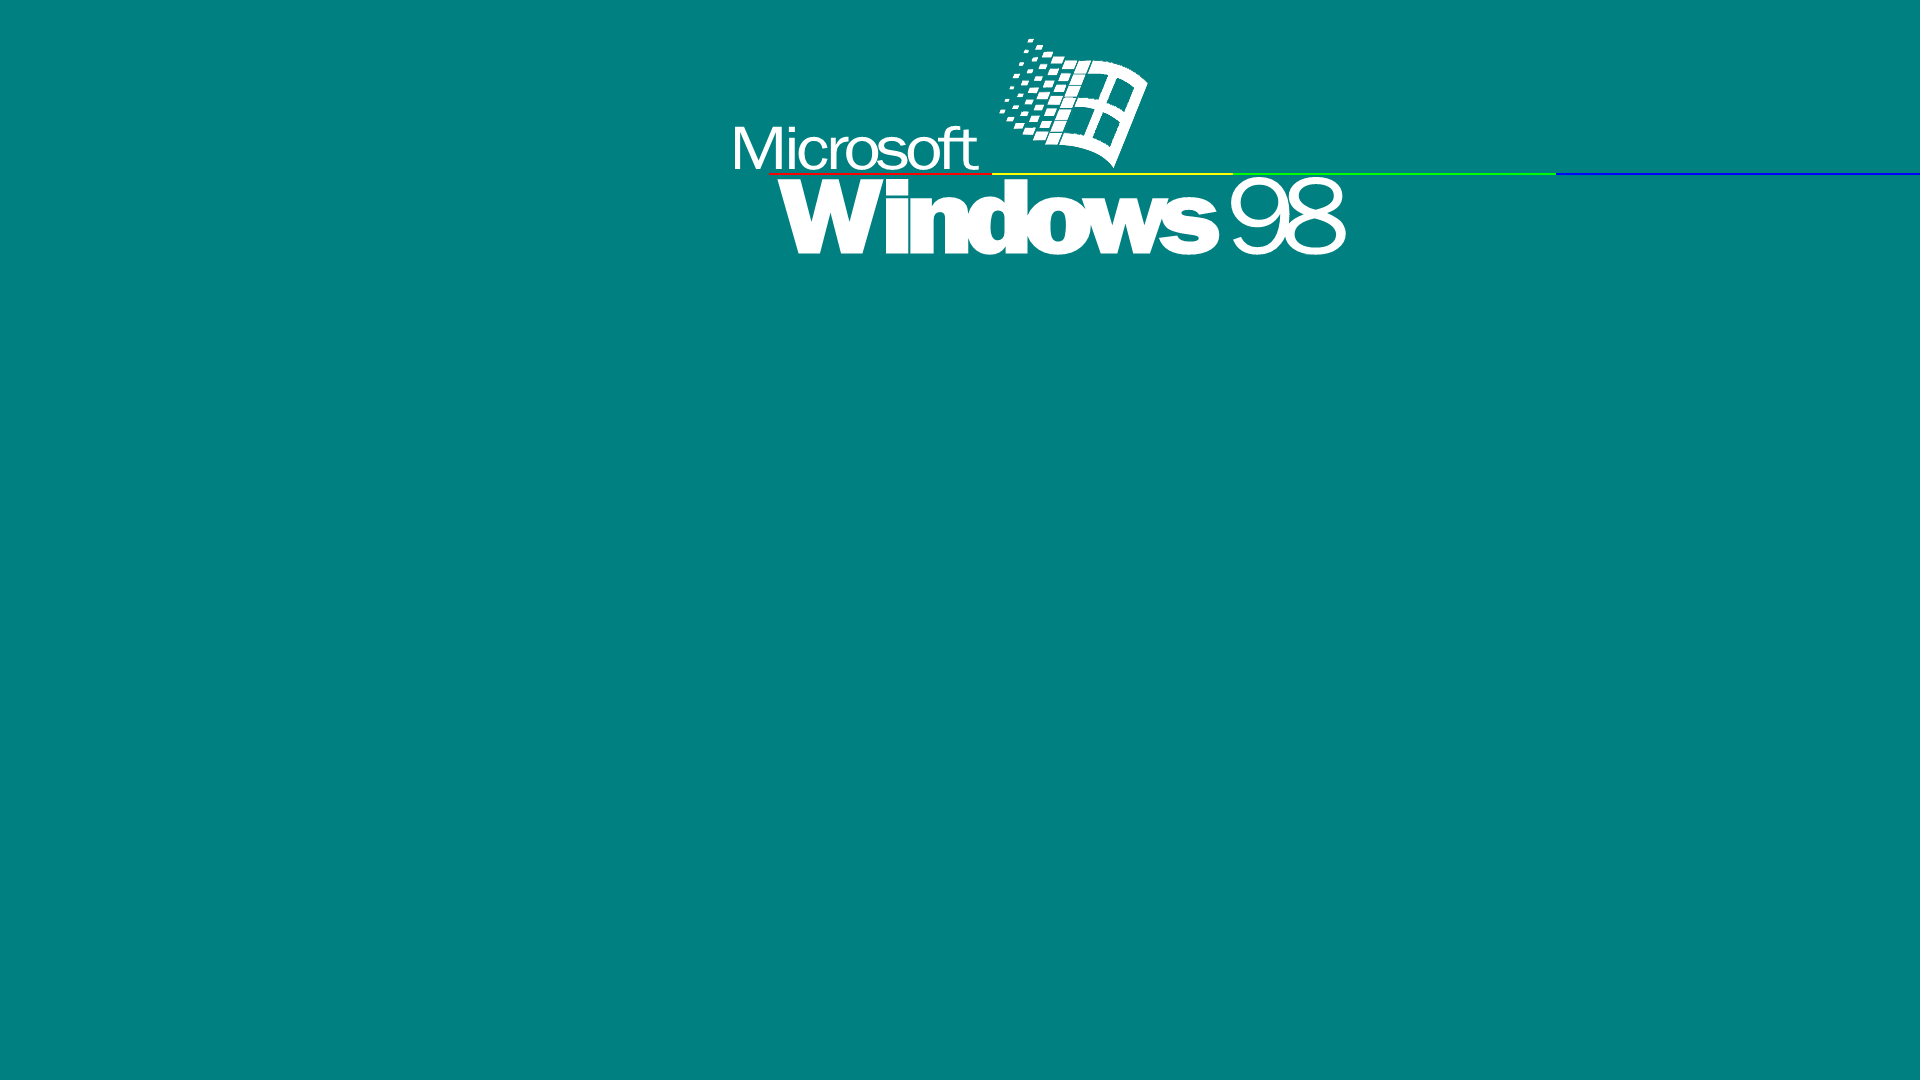 Windows 98 Retro Wallpaper By Axeldragani On Deviantart